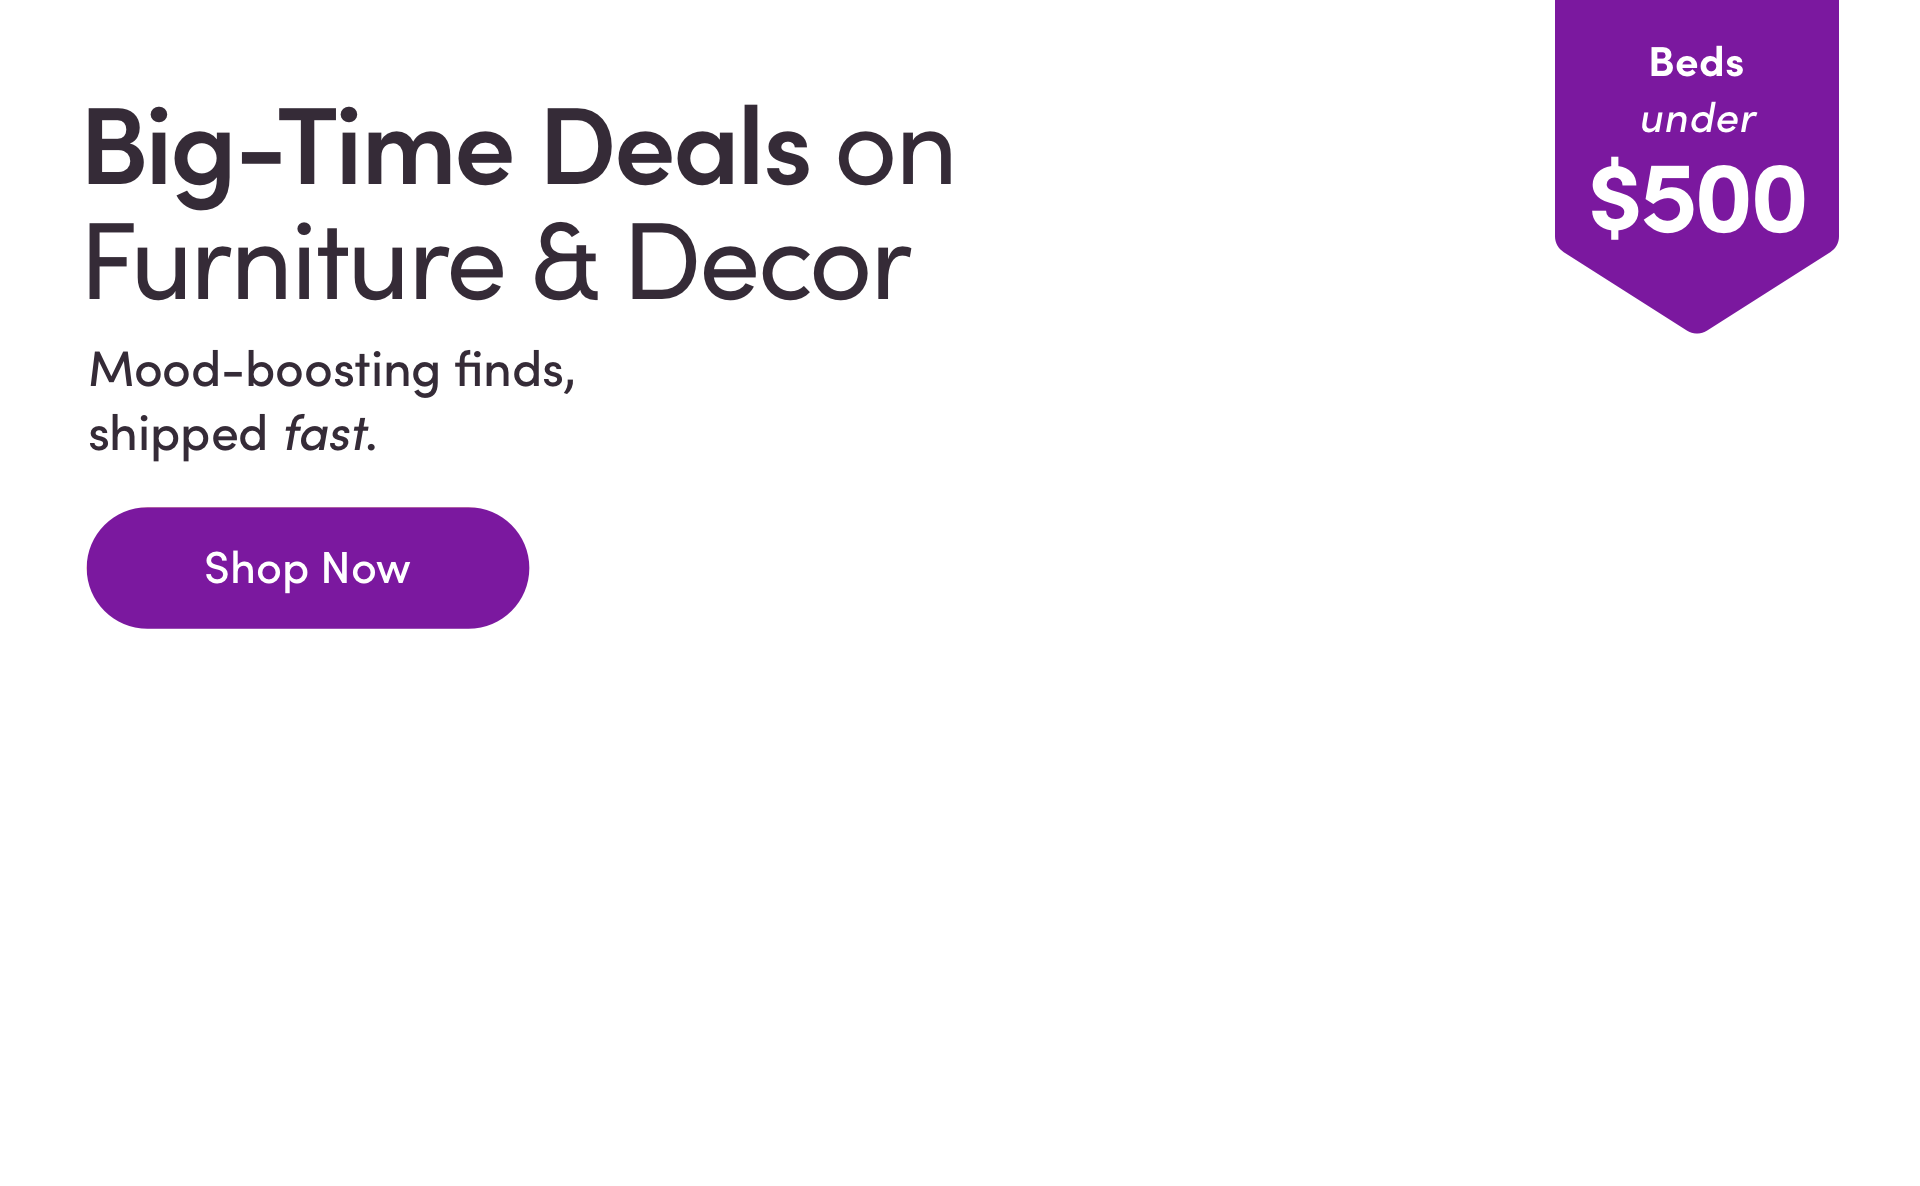 Beds Under $500. Big-Time Deals on Furniture & Decor. Mood-boosting finds, shipped fast. Shop Now.